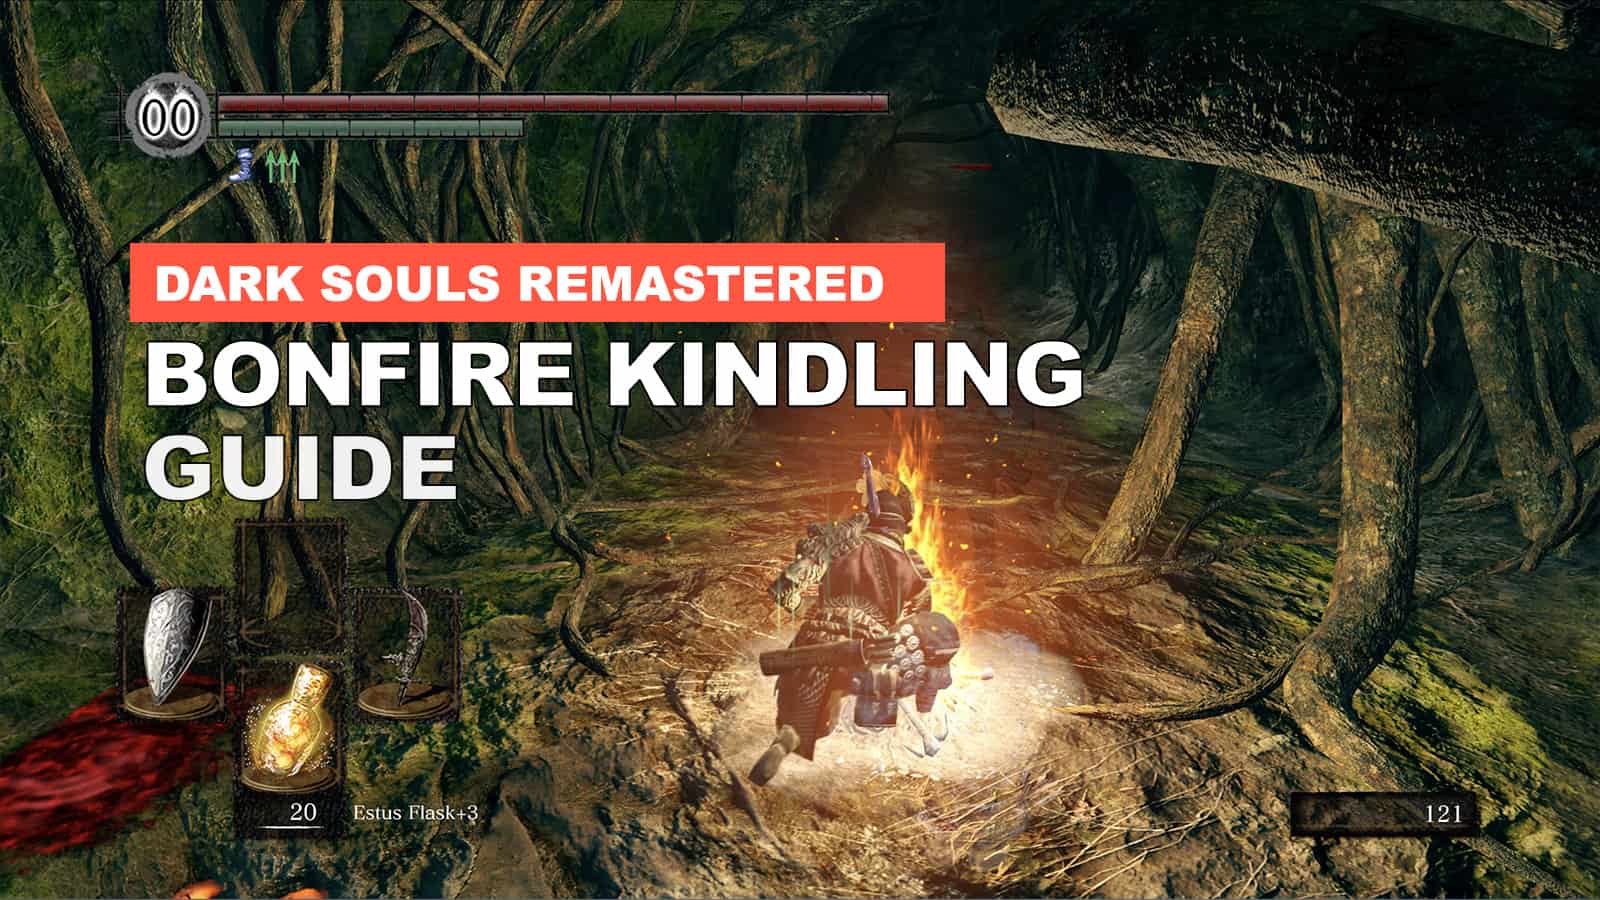 Bonfire Kindling In Dark Souls: How To Get More Estus Flask Charges